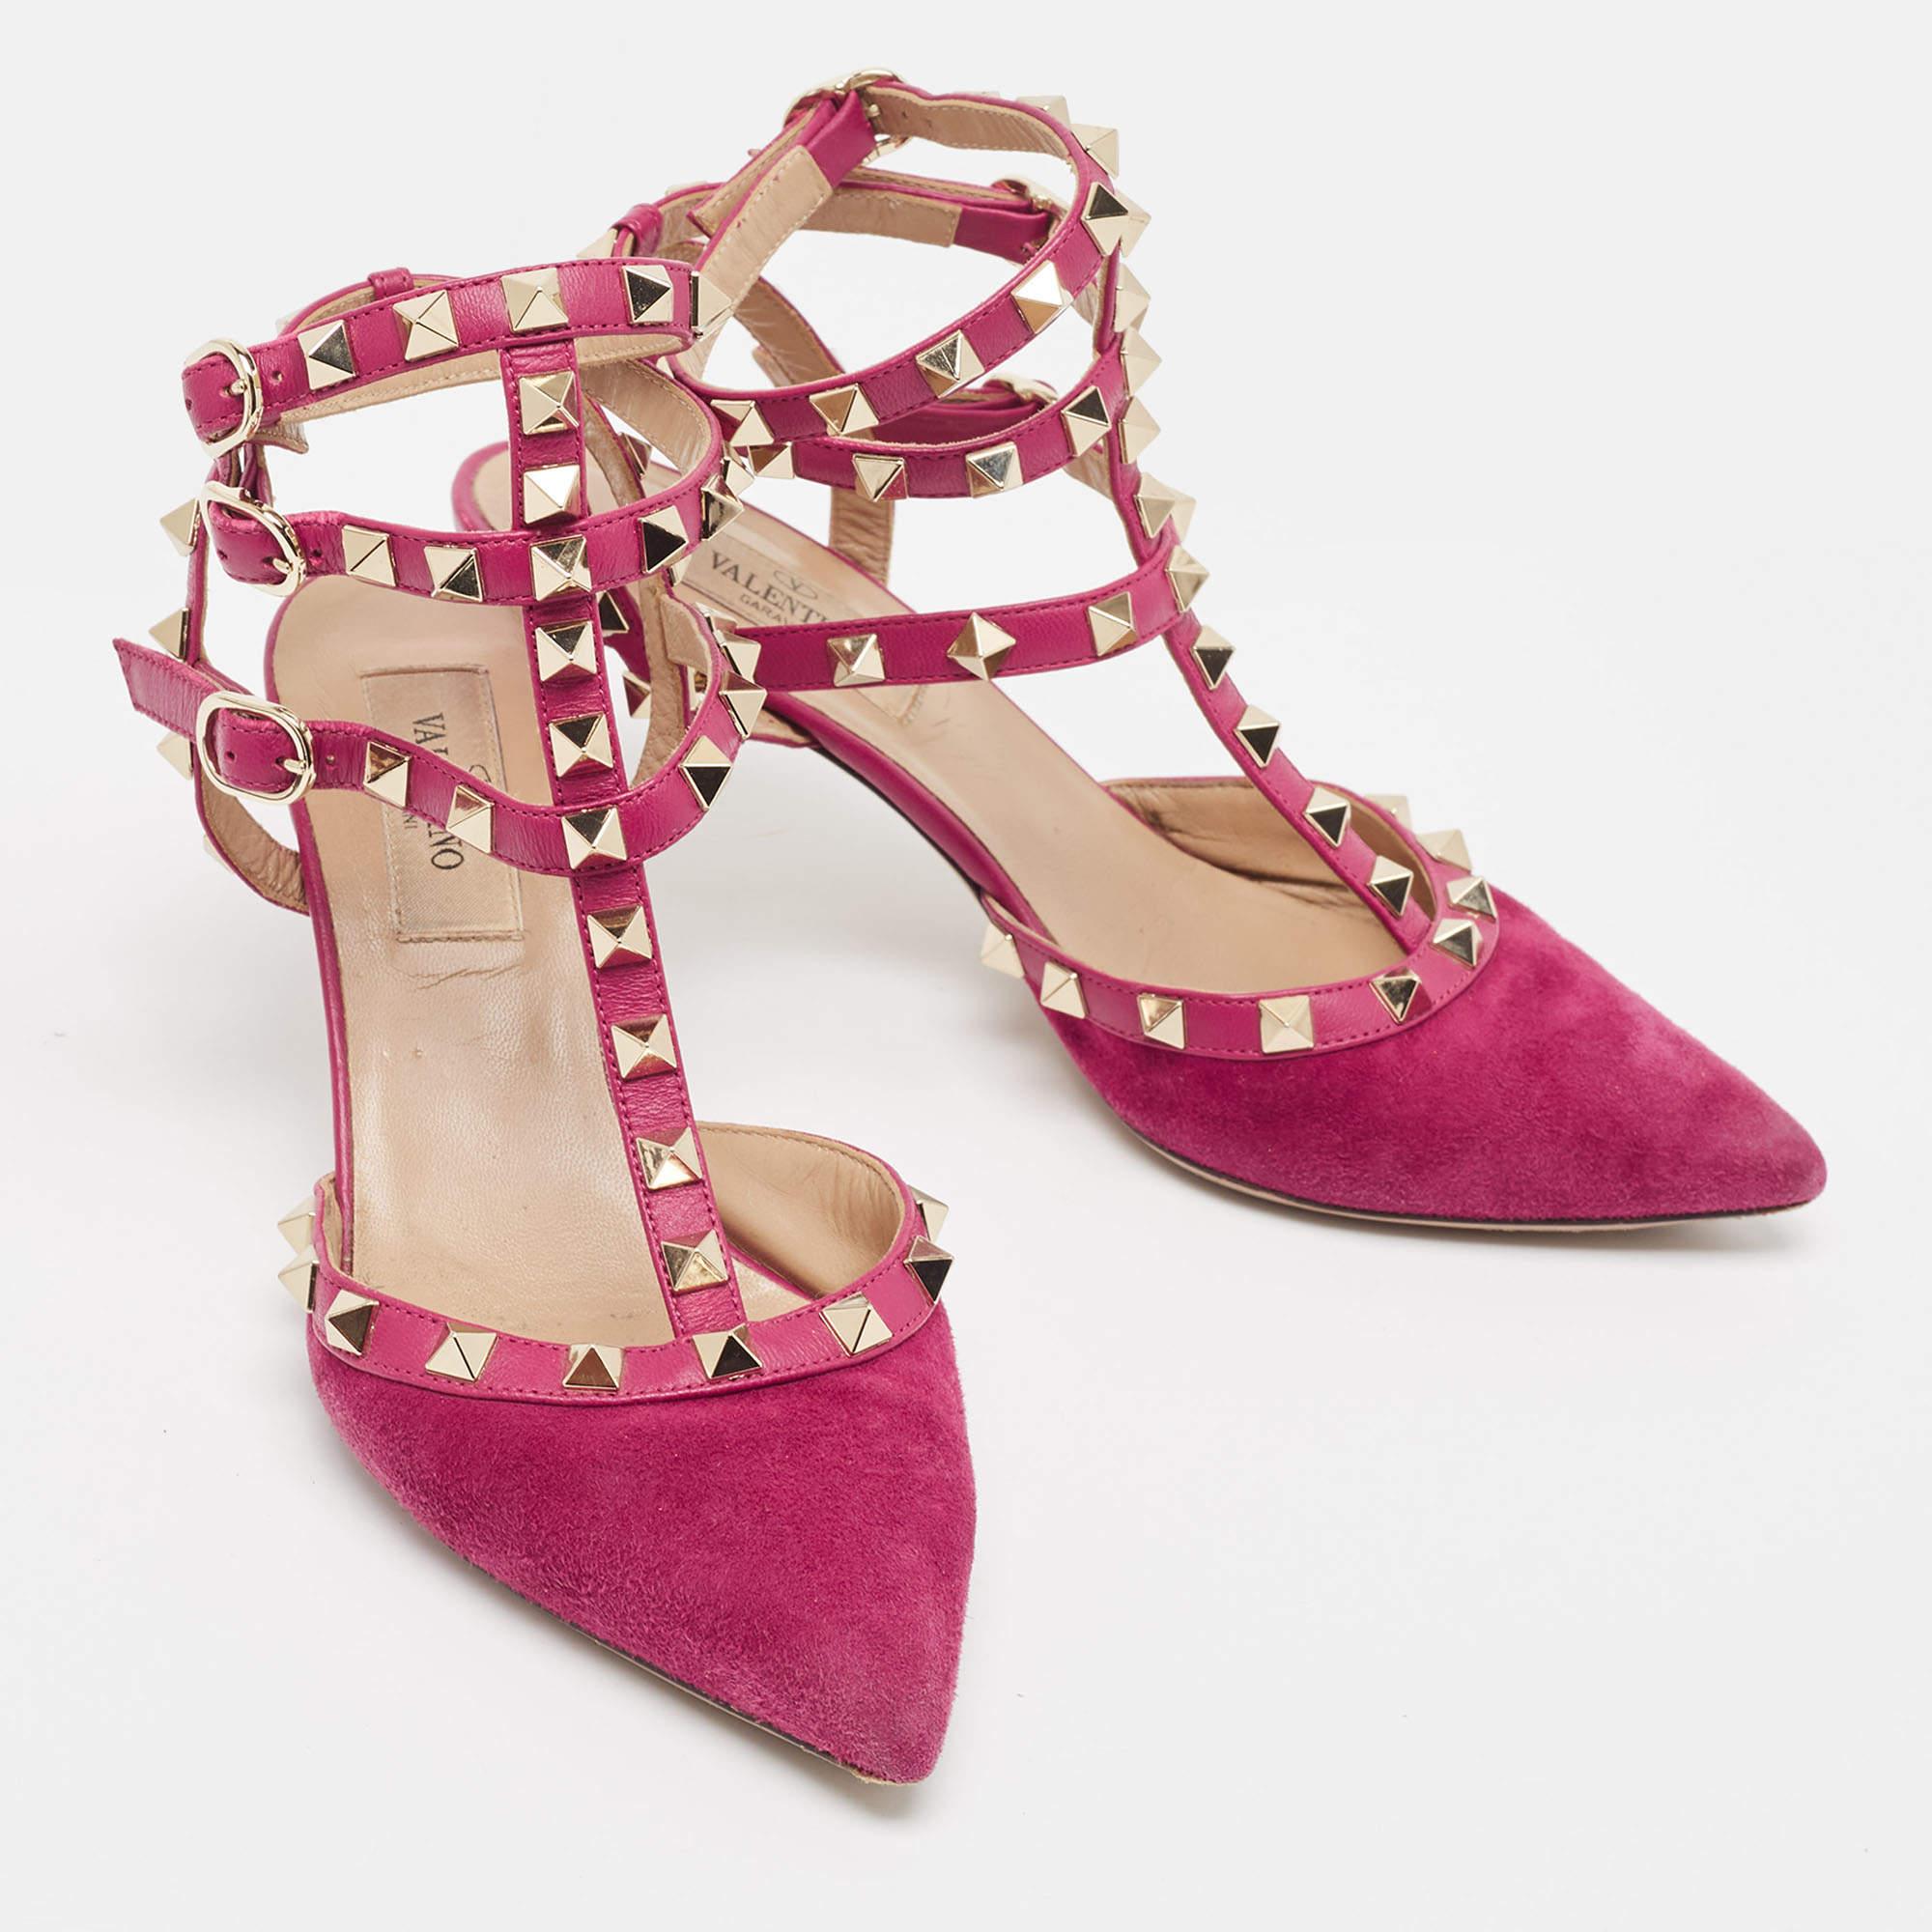 Valentino Pink Suede Rockstud Ankle Strap Pumps Size 36 In Good Condition For Sale In Dubai, Al Qouz 2